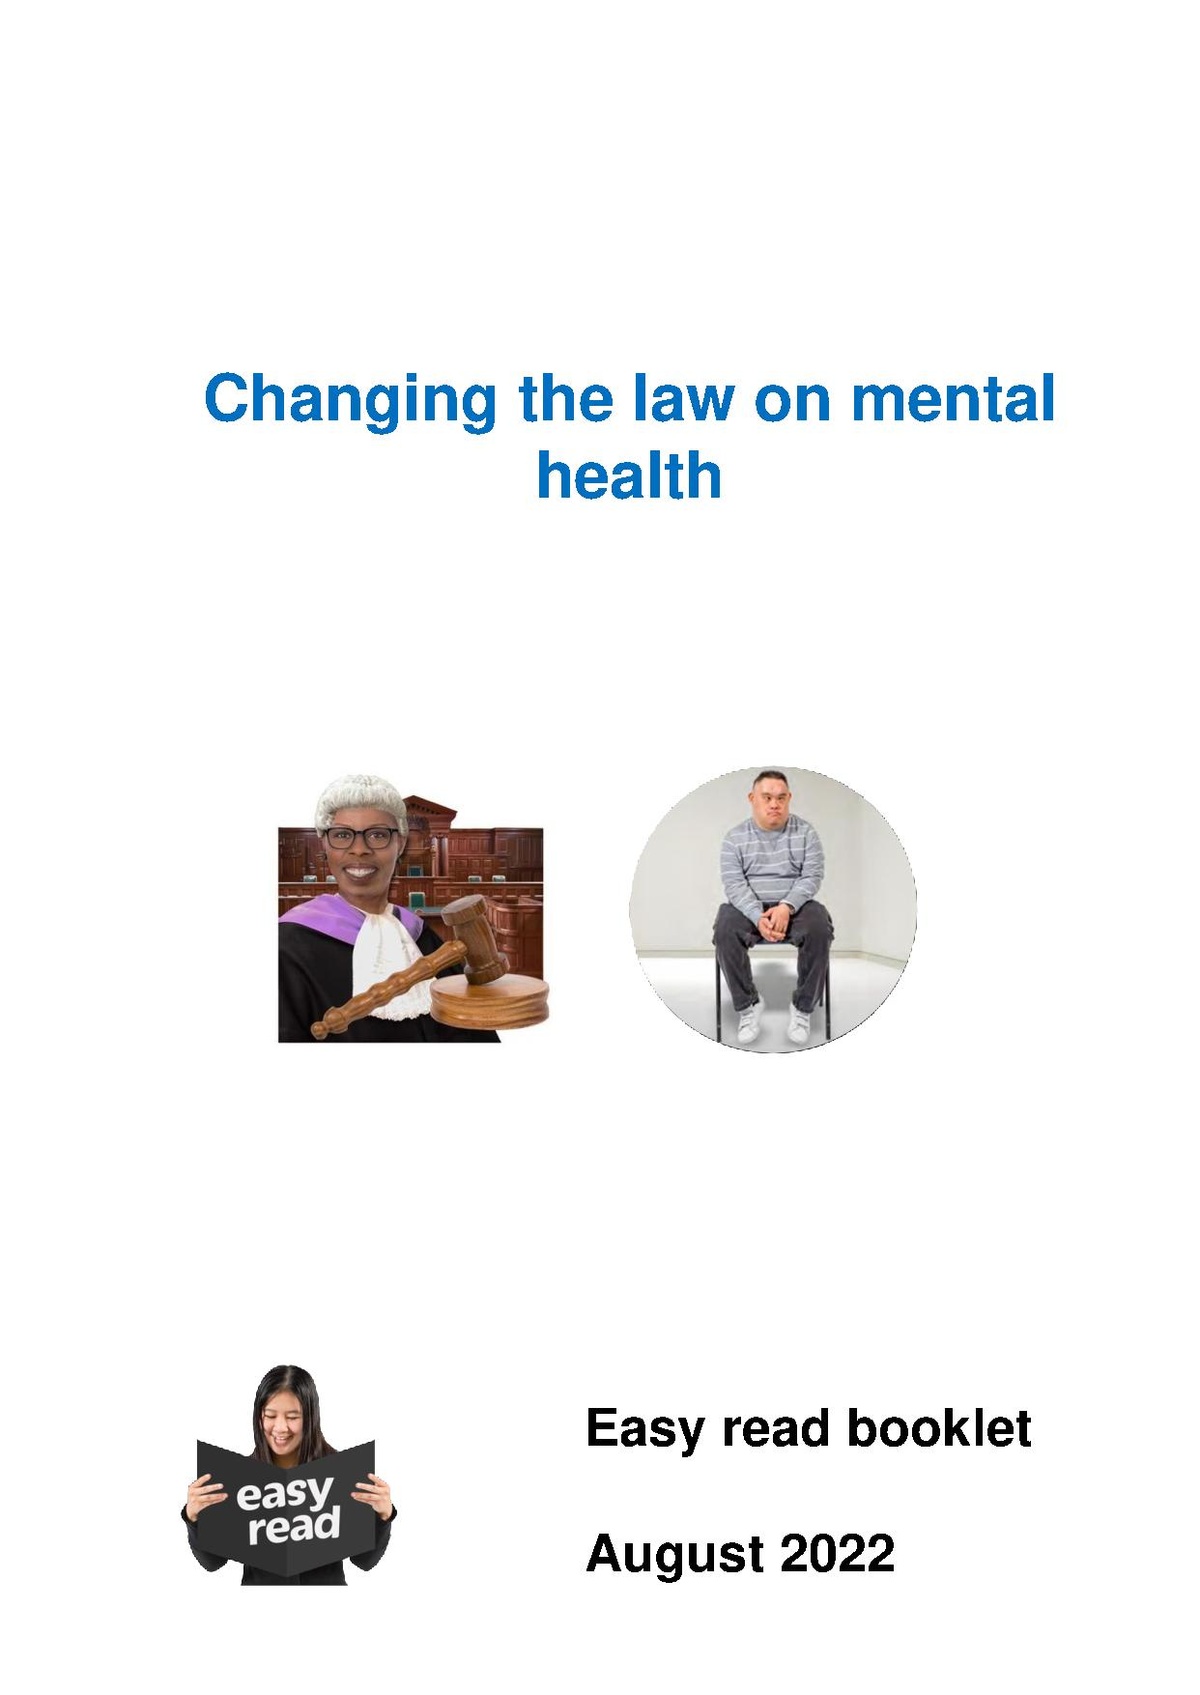 mental health law research topics